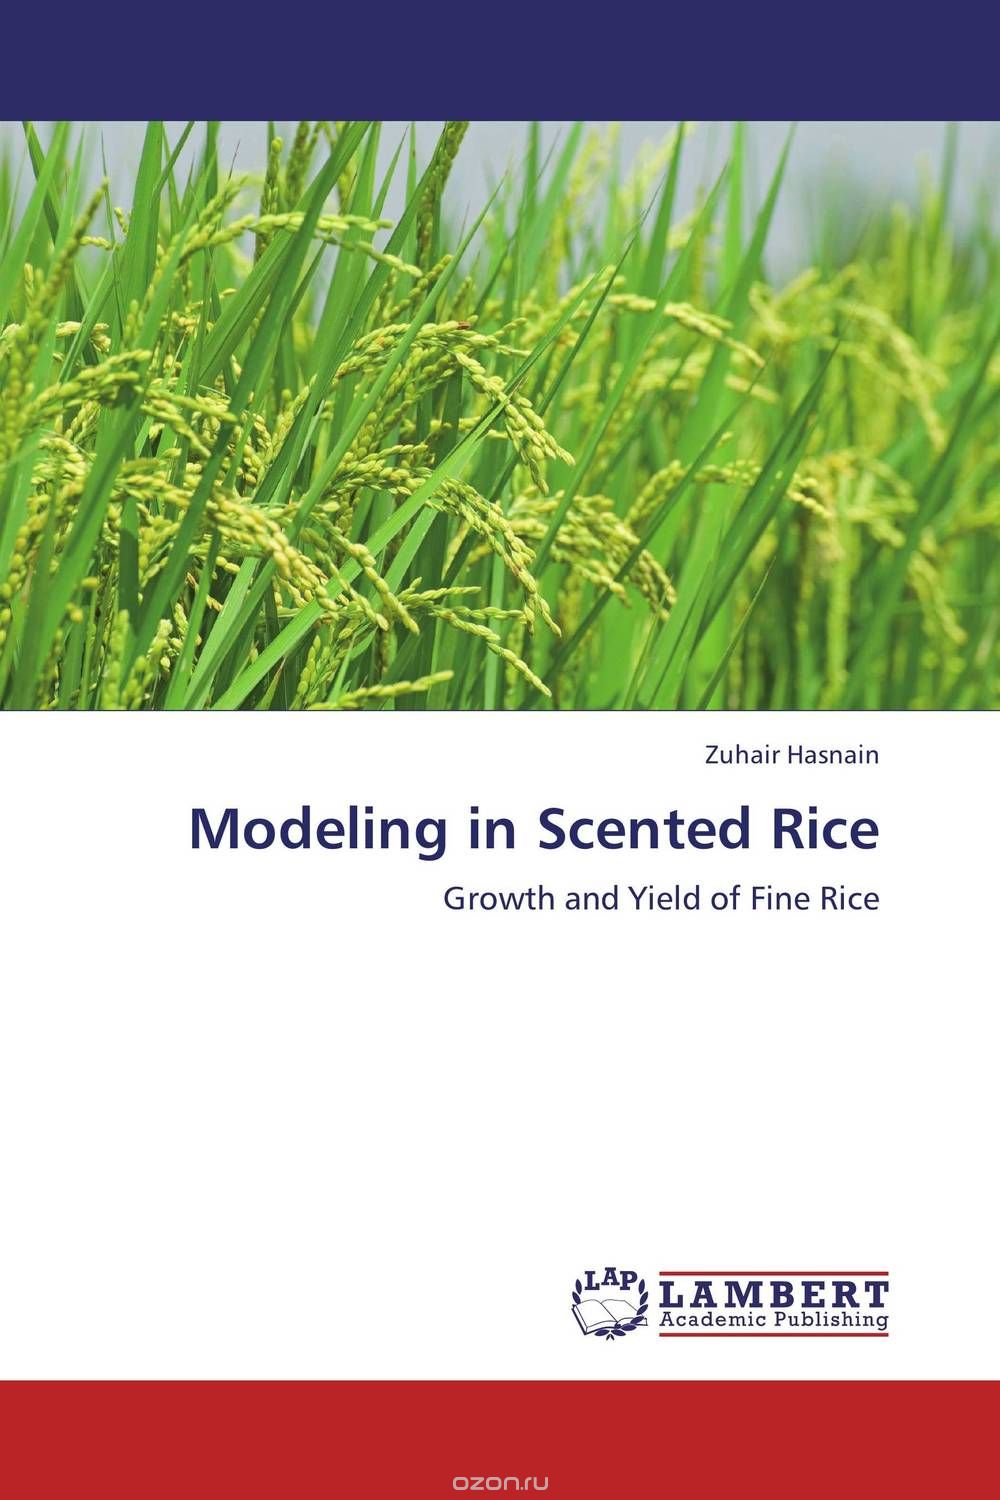 Скачать книгу "Modeling in Scented Rice"